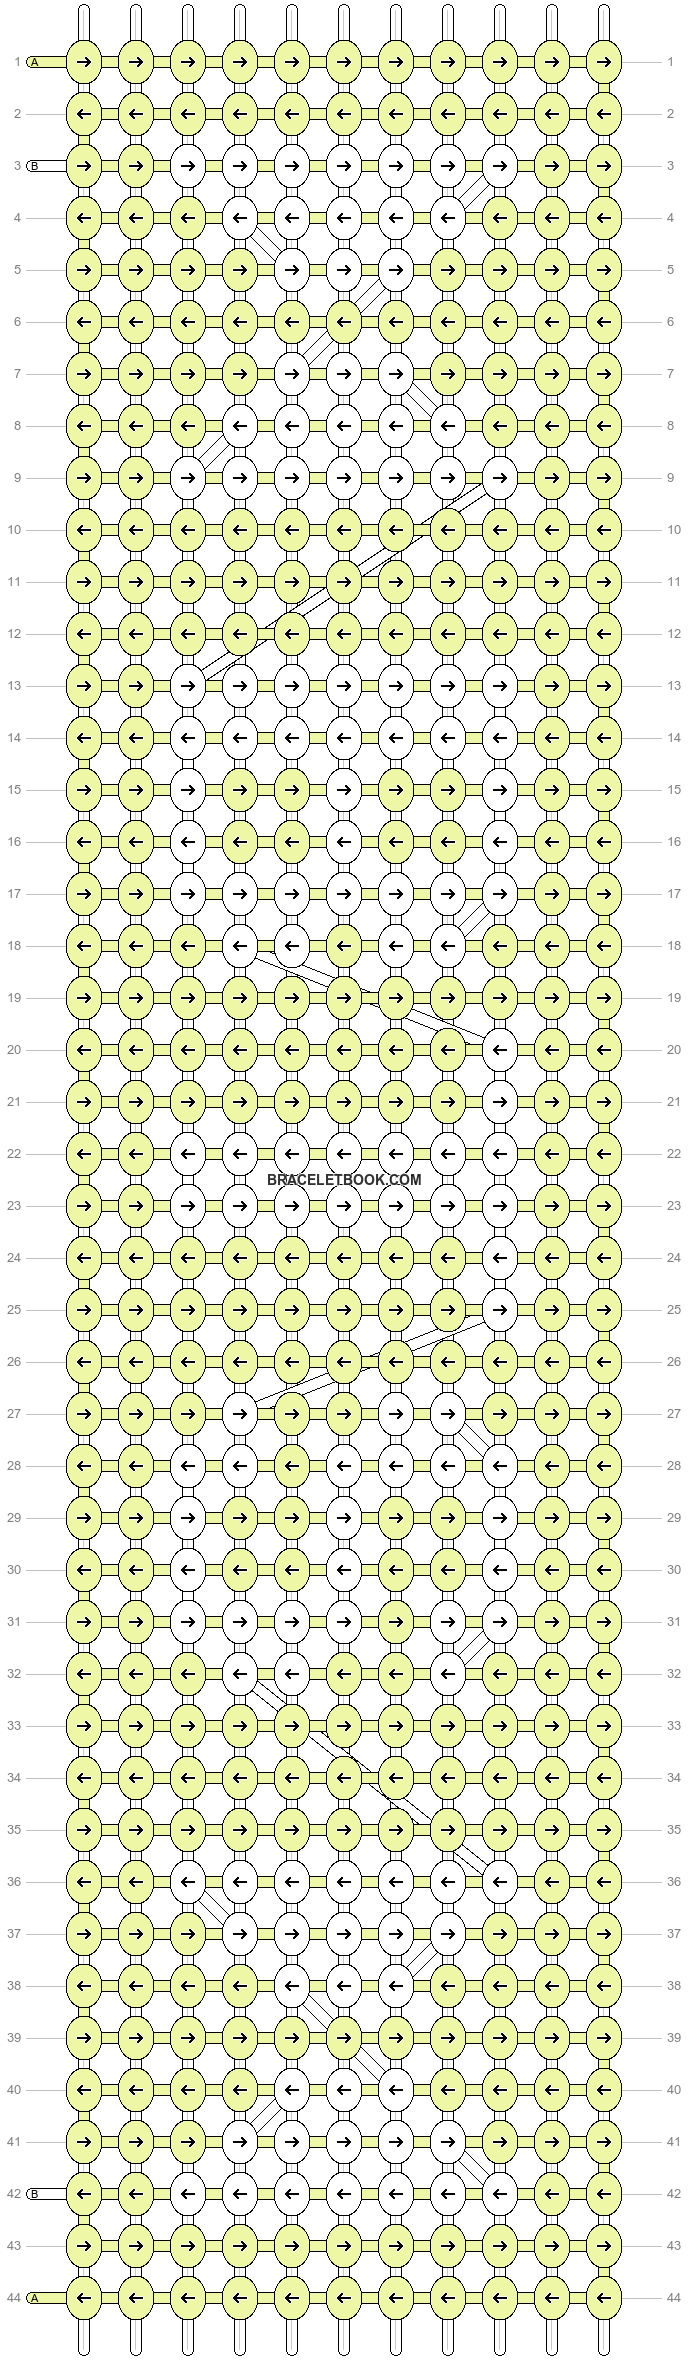 Alpha pattern #40662 variation #127756 pattern